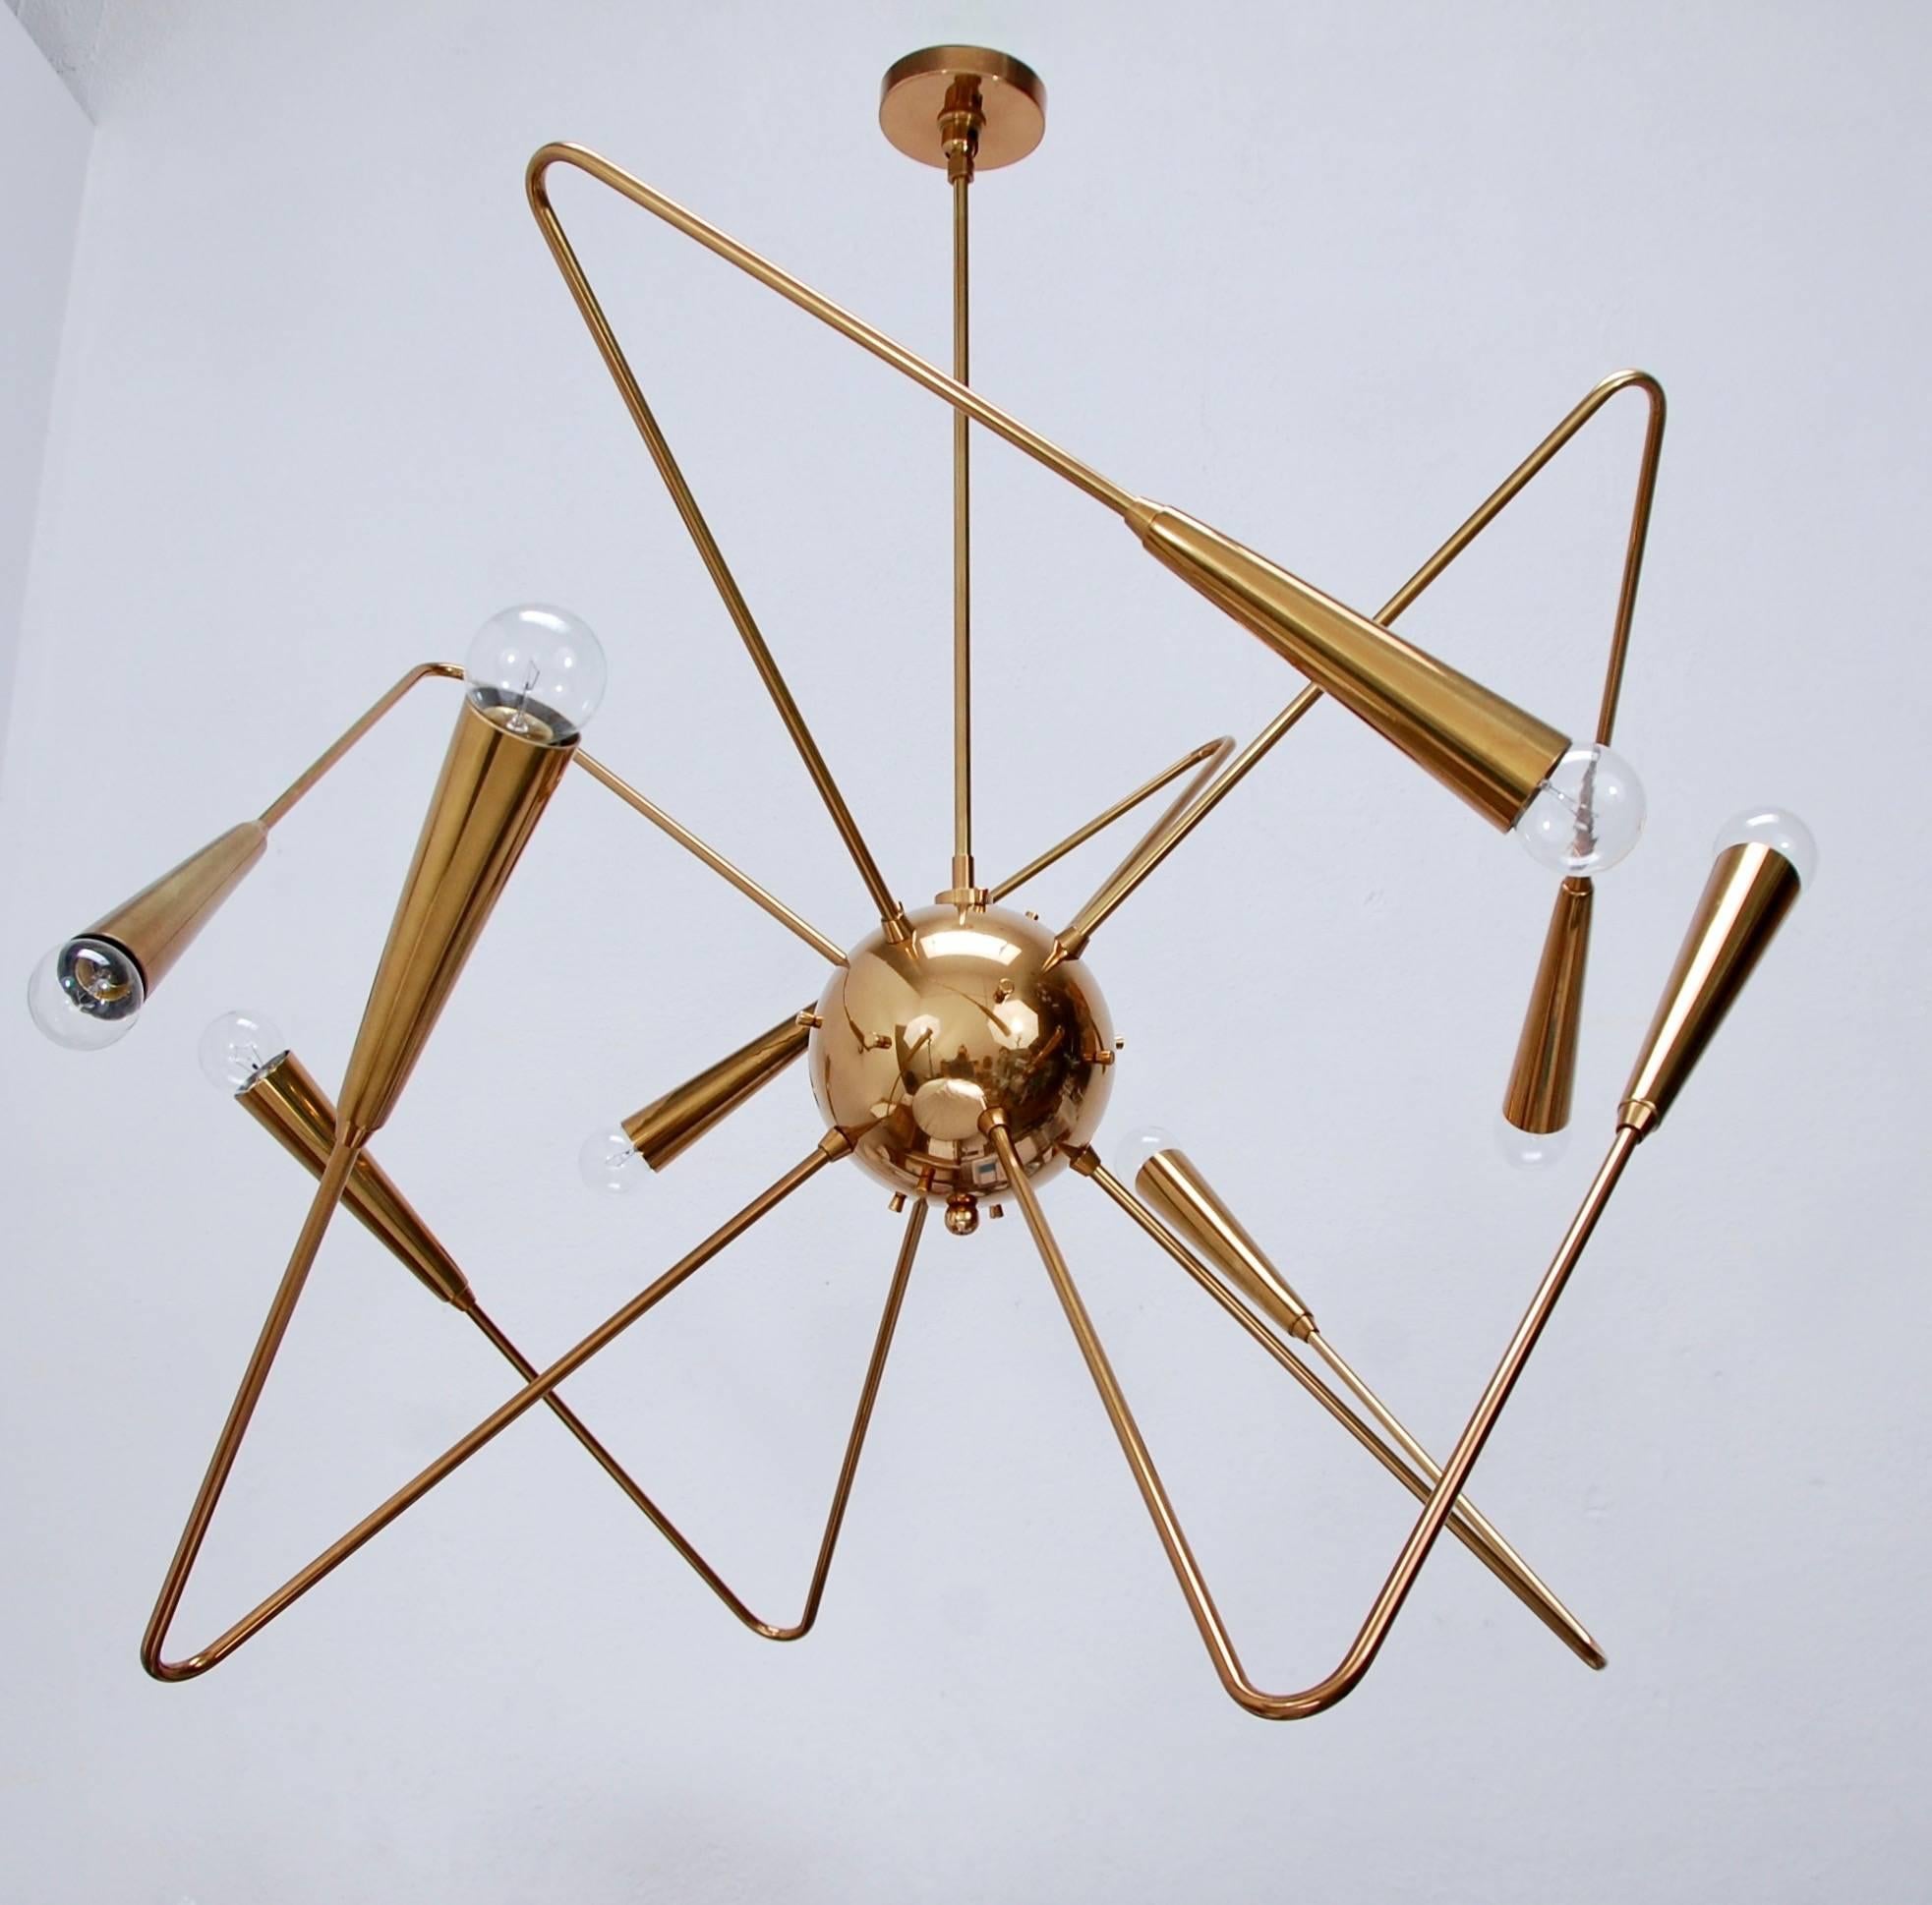 Stunning LU brass Sputnik chandelier in the spirit of Mid-Century Modern design. Solid brass fabrication.
Measures: Fixture height 26”
Diameter 32”
Current drop 36”.
 